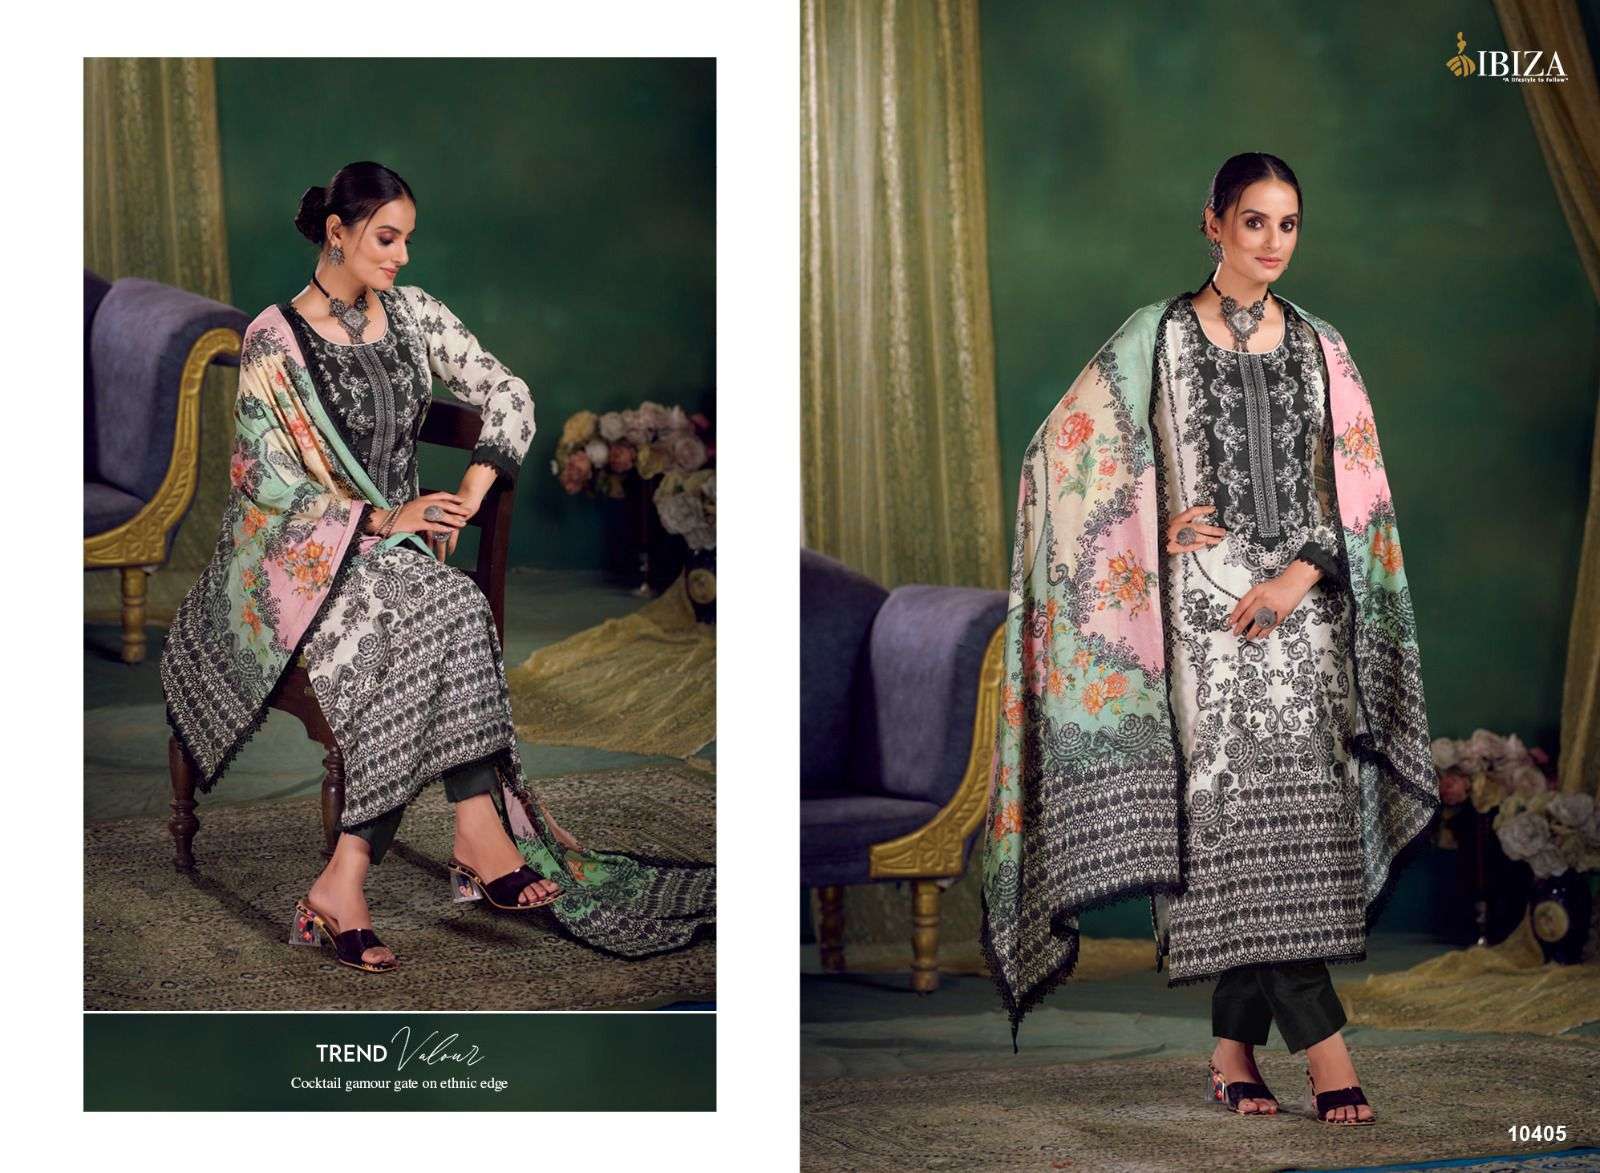 ibiza riyasat vol-3 10403-10406 series fancy designer pakistani salwar suits catalogue collection 2023